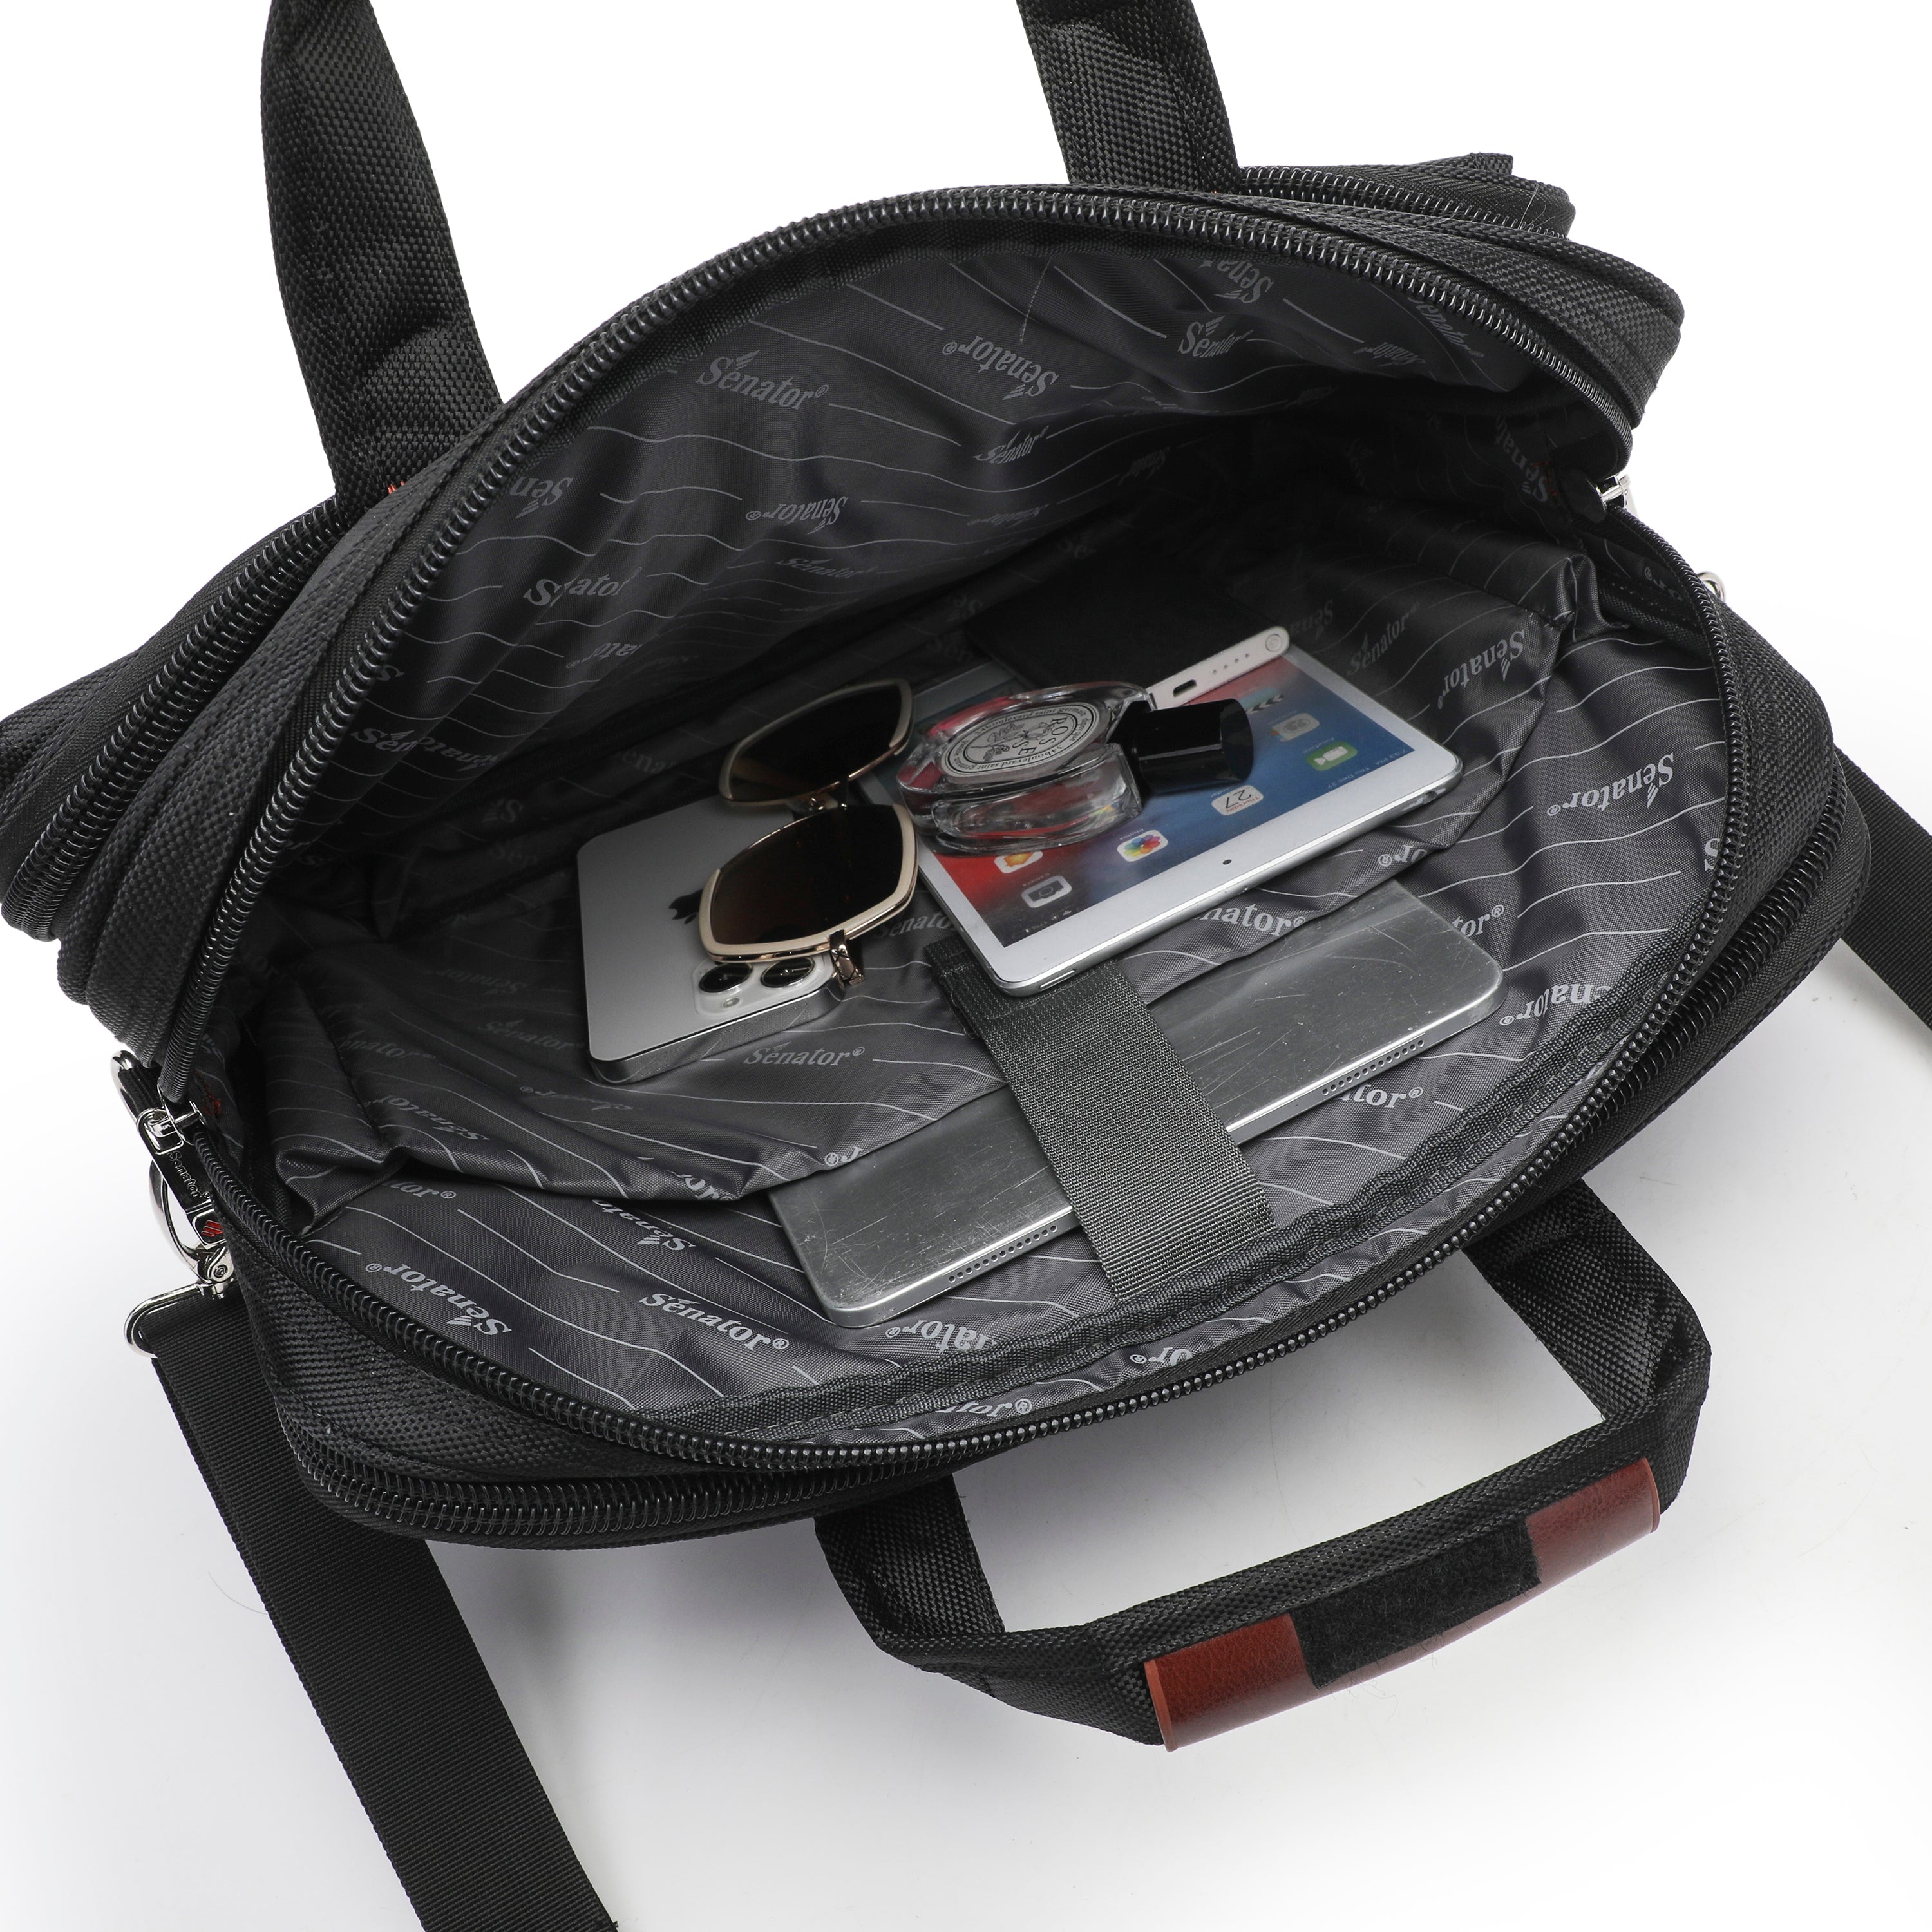 Senator 16 inch Expandable Nylon Shoulder Laptop Bag Light Weight Water Resistant with RFID pockets and Adjustable Shoulder Straps Business College School Students – KH8071